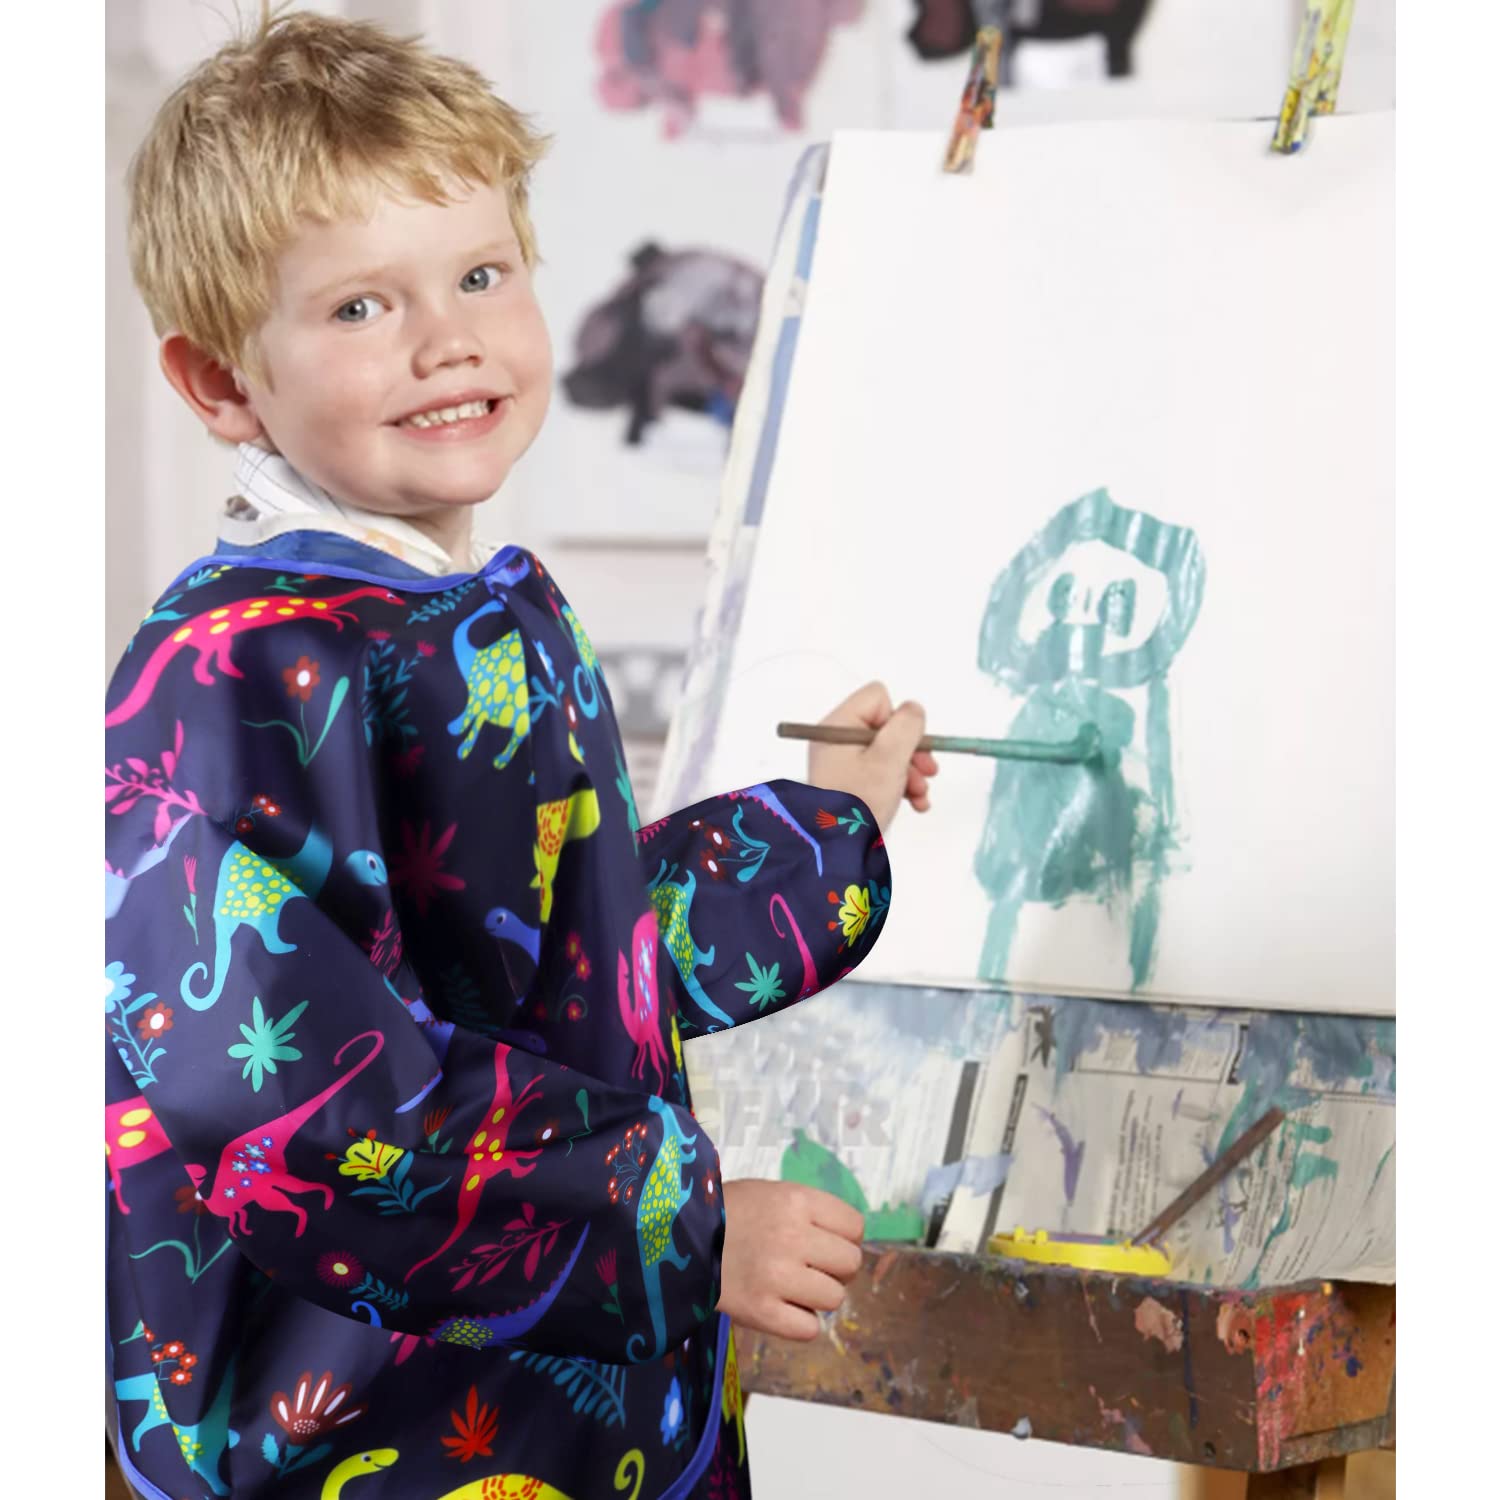 Chanaco 2 Pack Kids Art Smock Toddler Smock Waterproof Painting Apron for Children Dinosaur Artist Smock for Age 3-8 Years